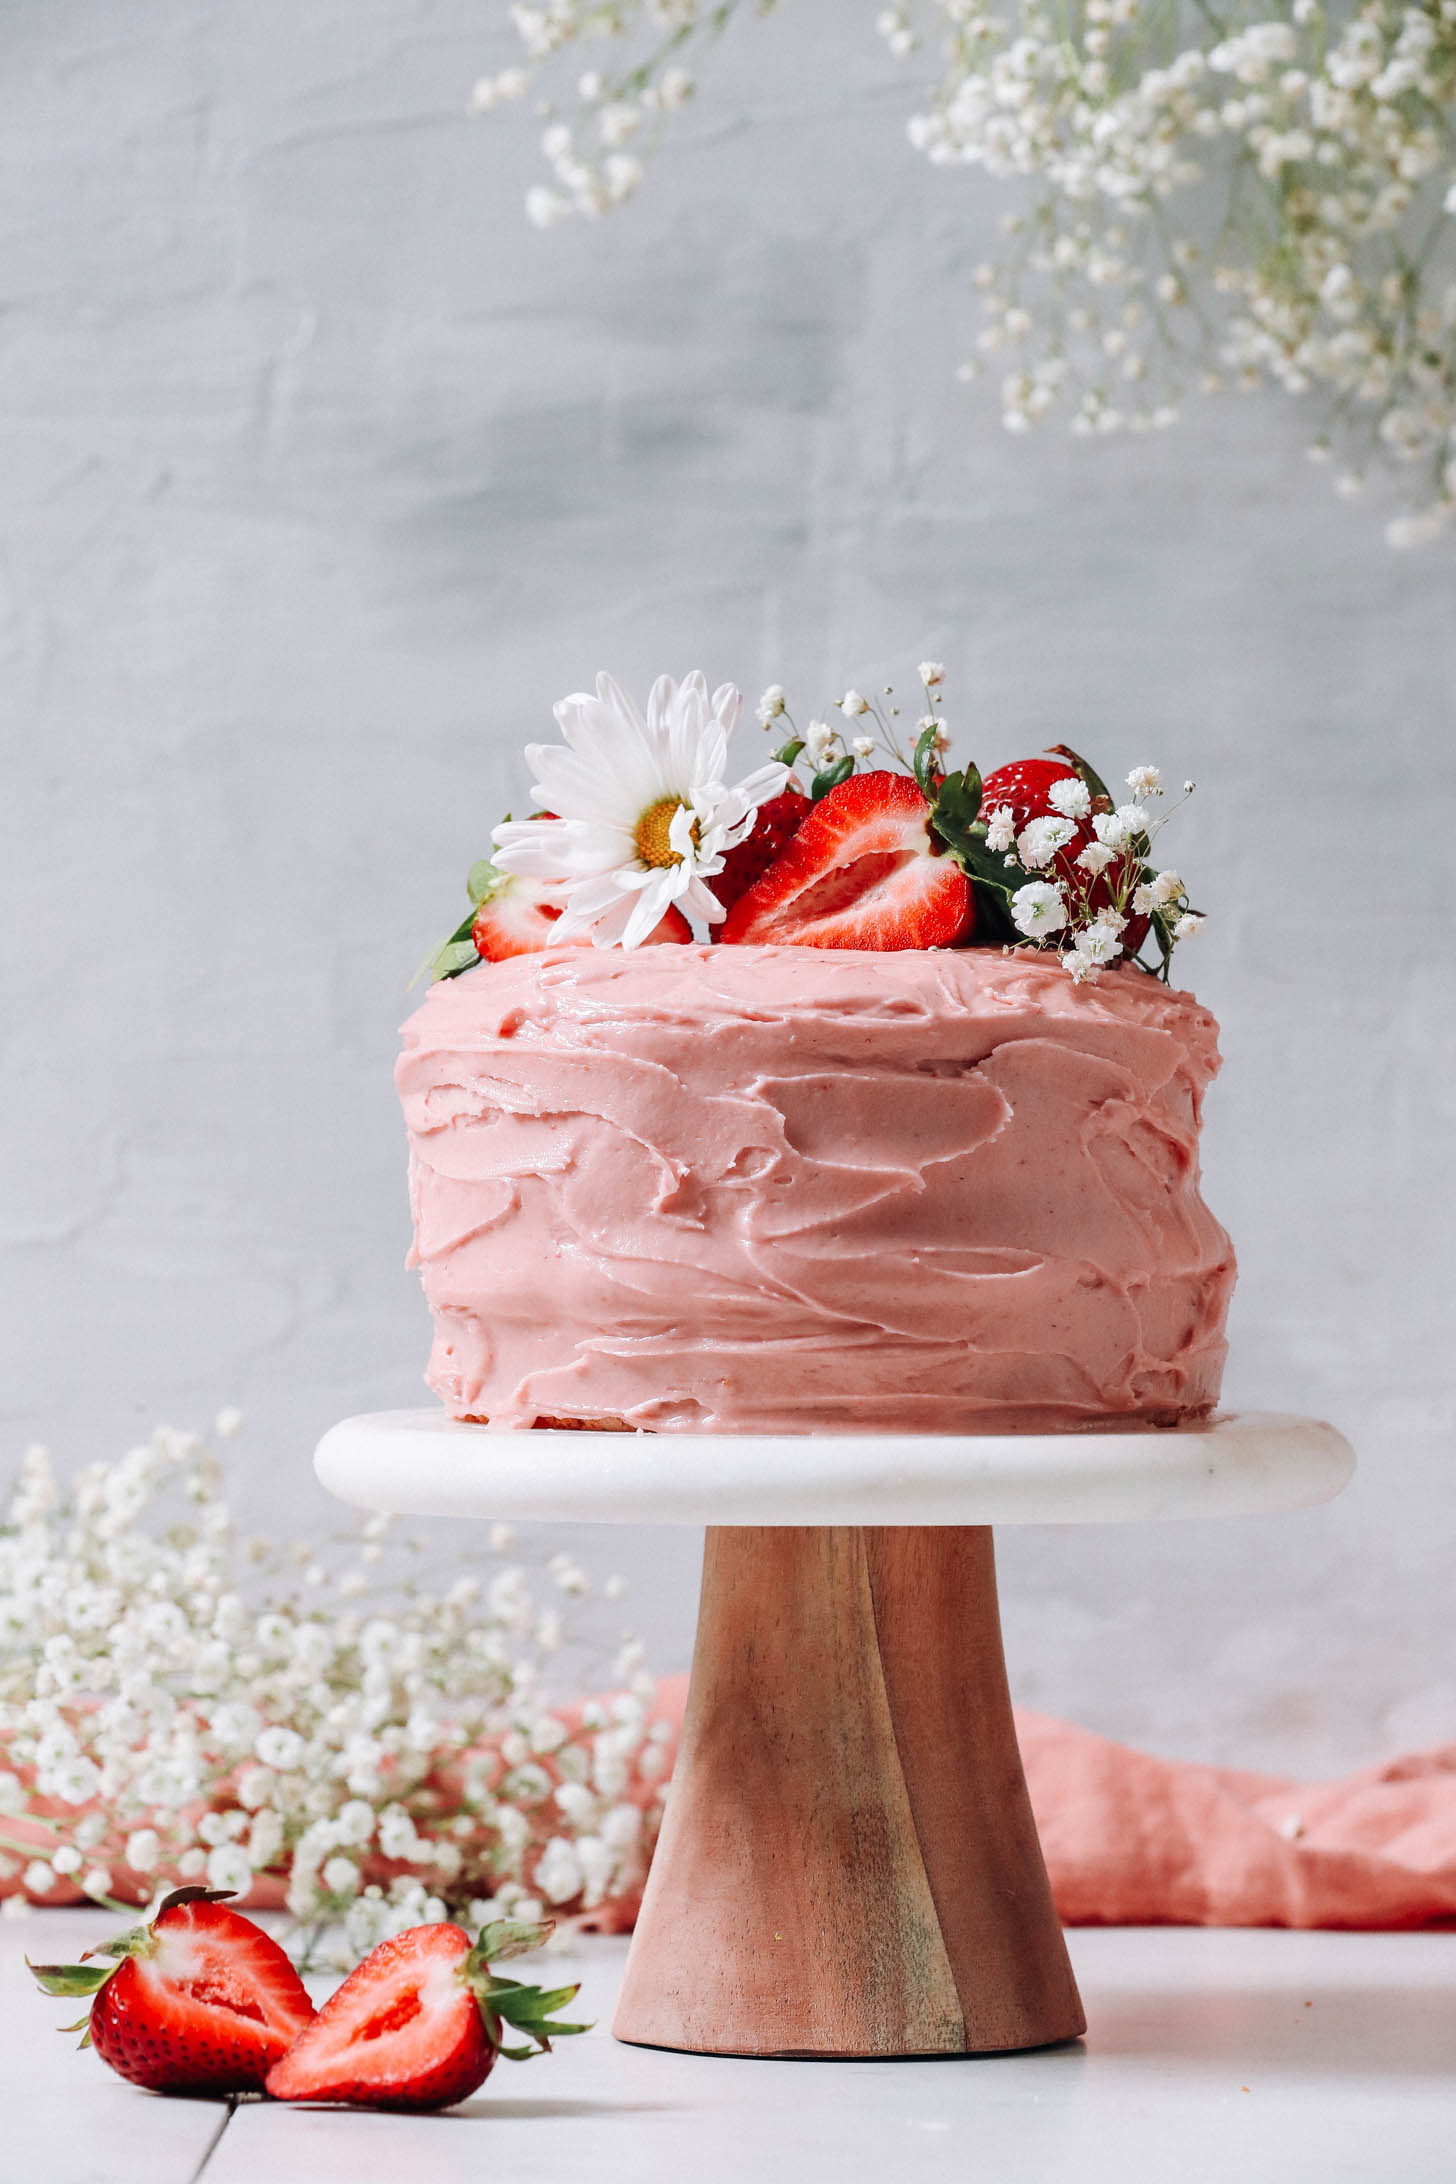 Gluten-free vegan strawberry cake decorated with fresh strawberries and flowers